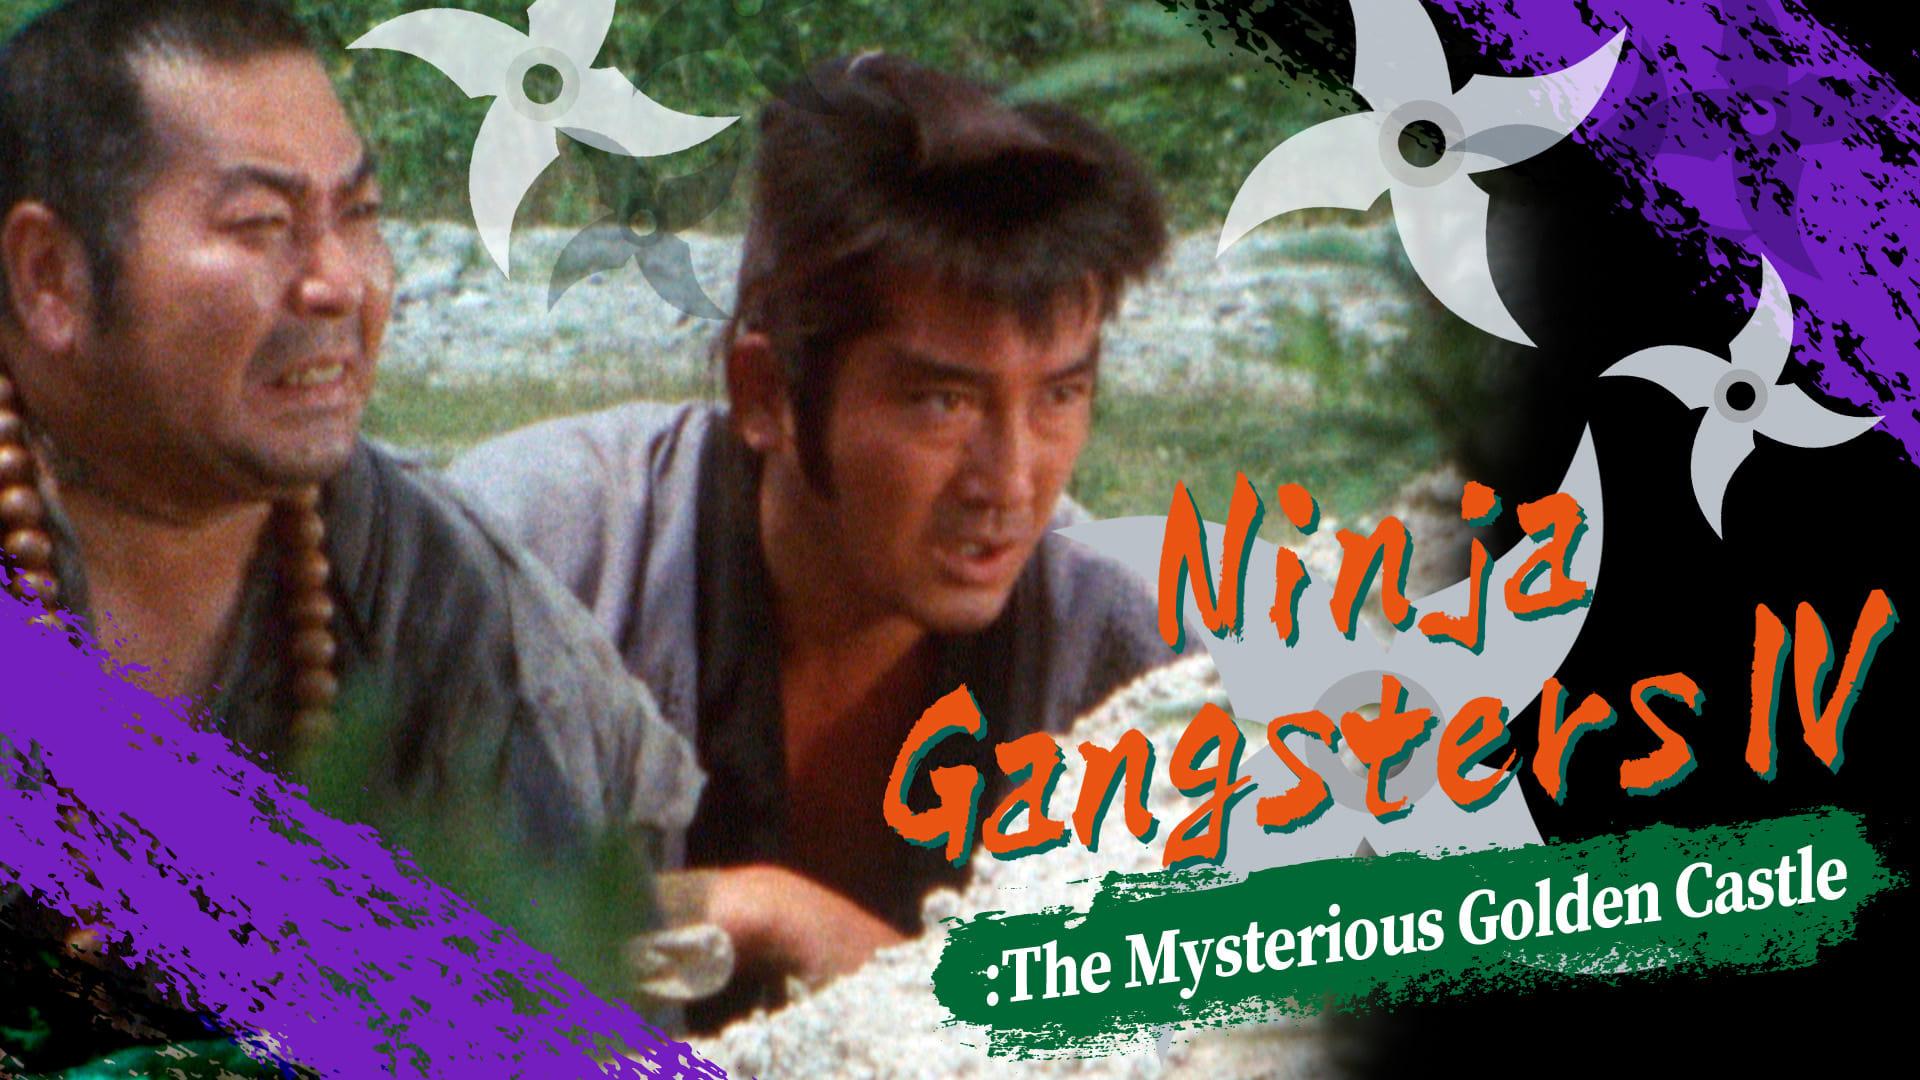 Ninja Gangsters IV: The Mysterious Golden Castle backdrop